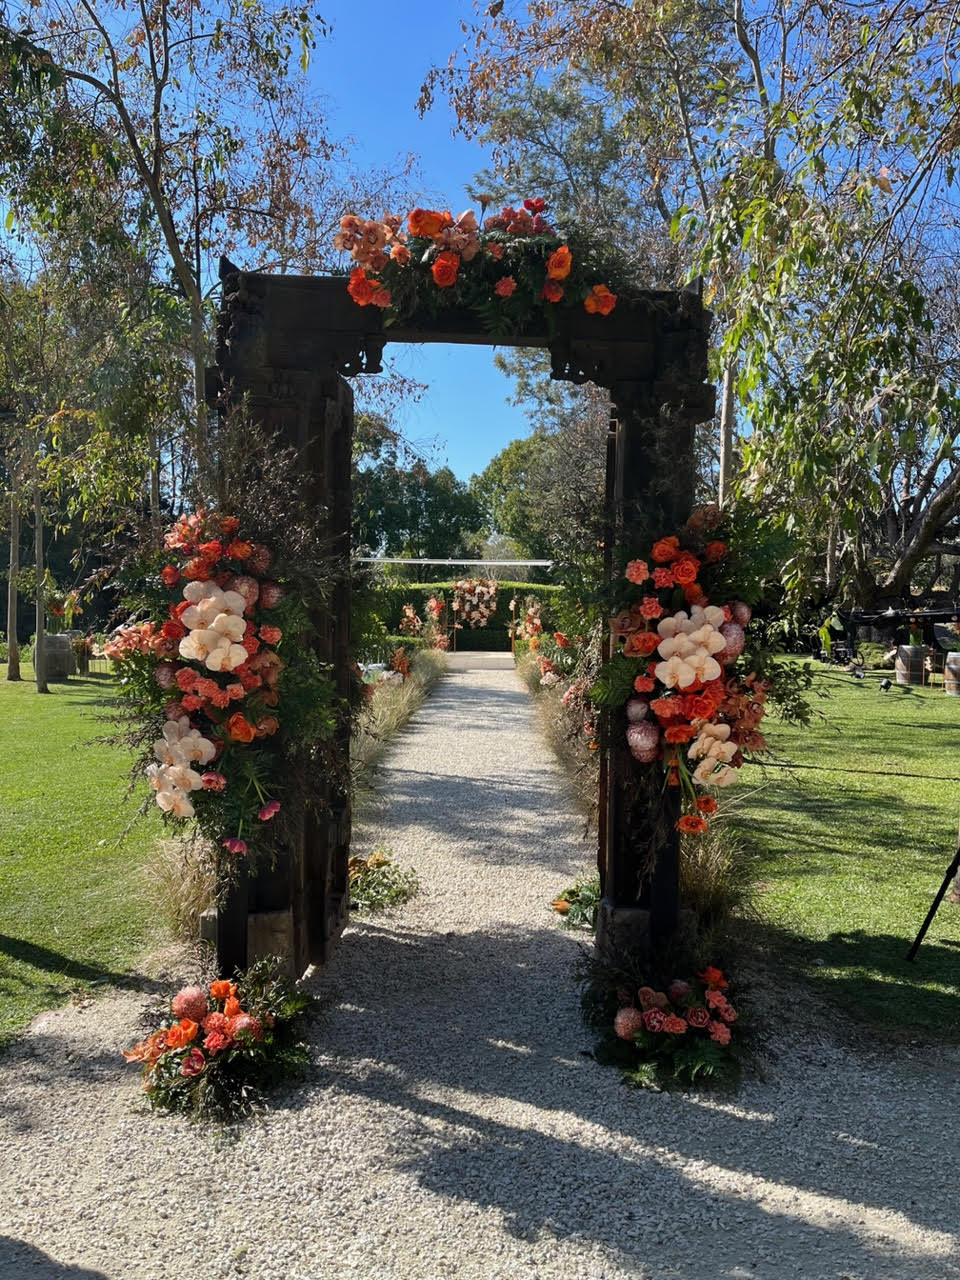 unique-wedding-flowers